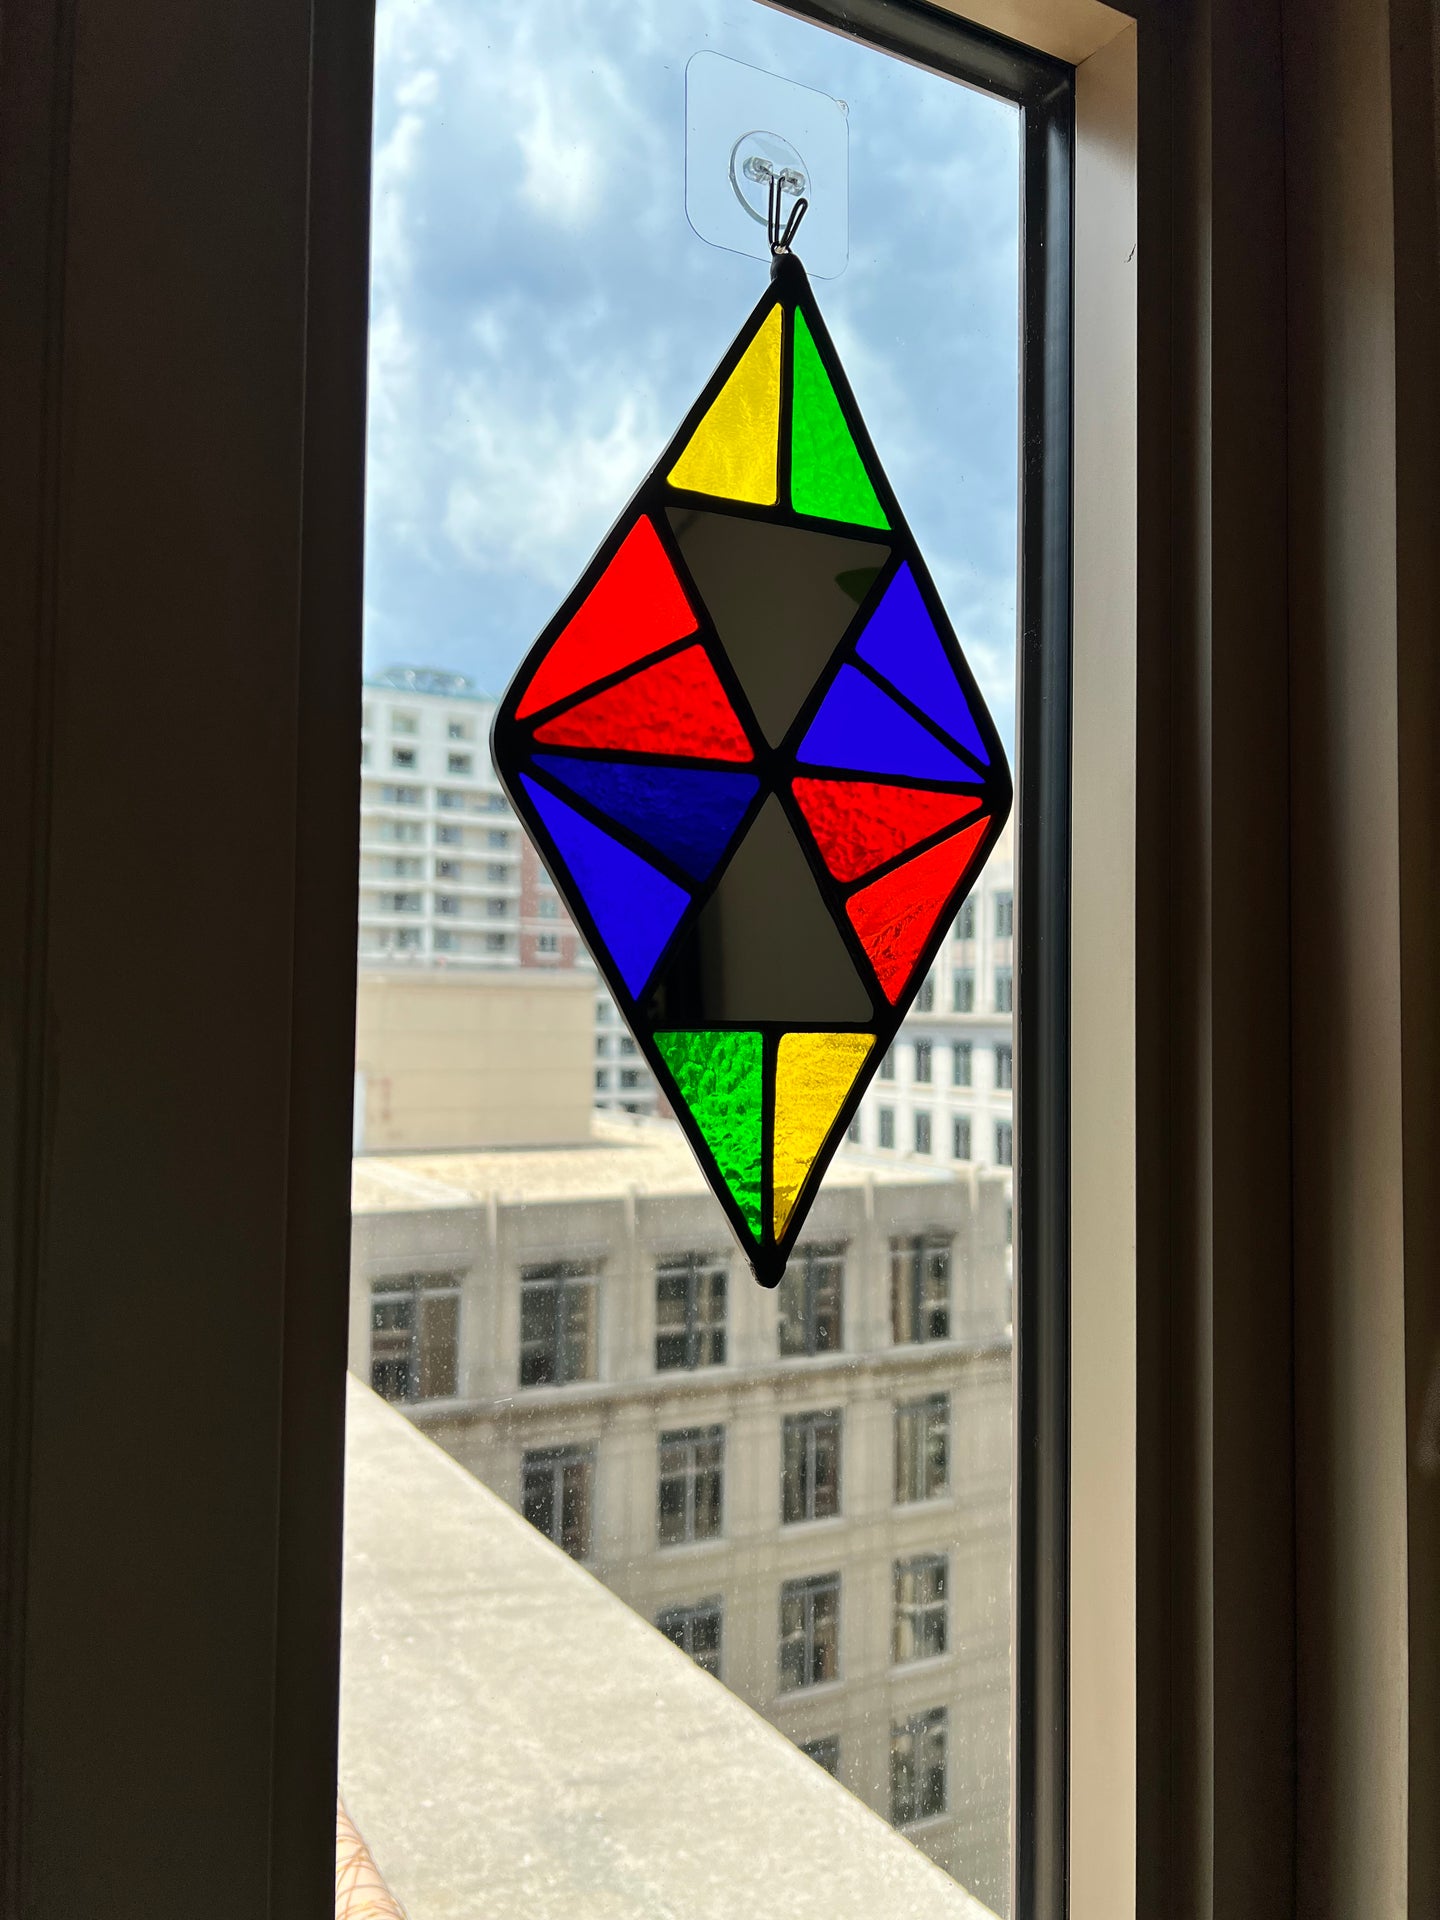 Double rainbow triangle